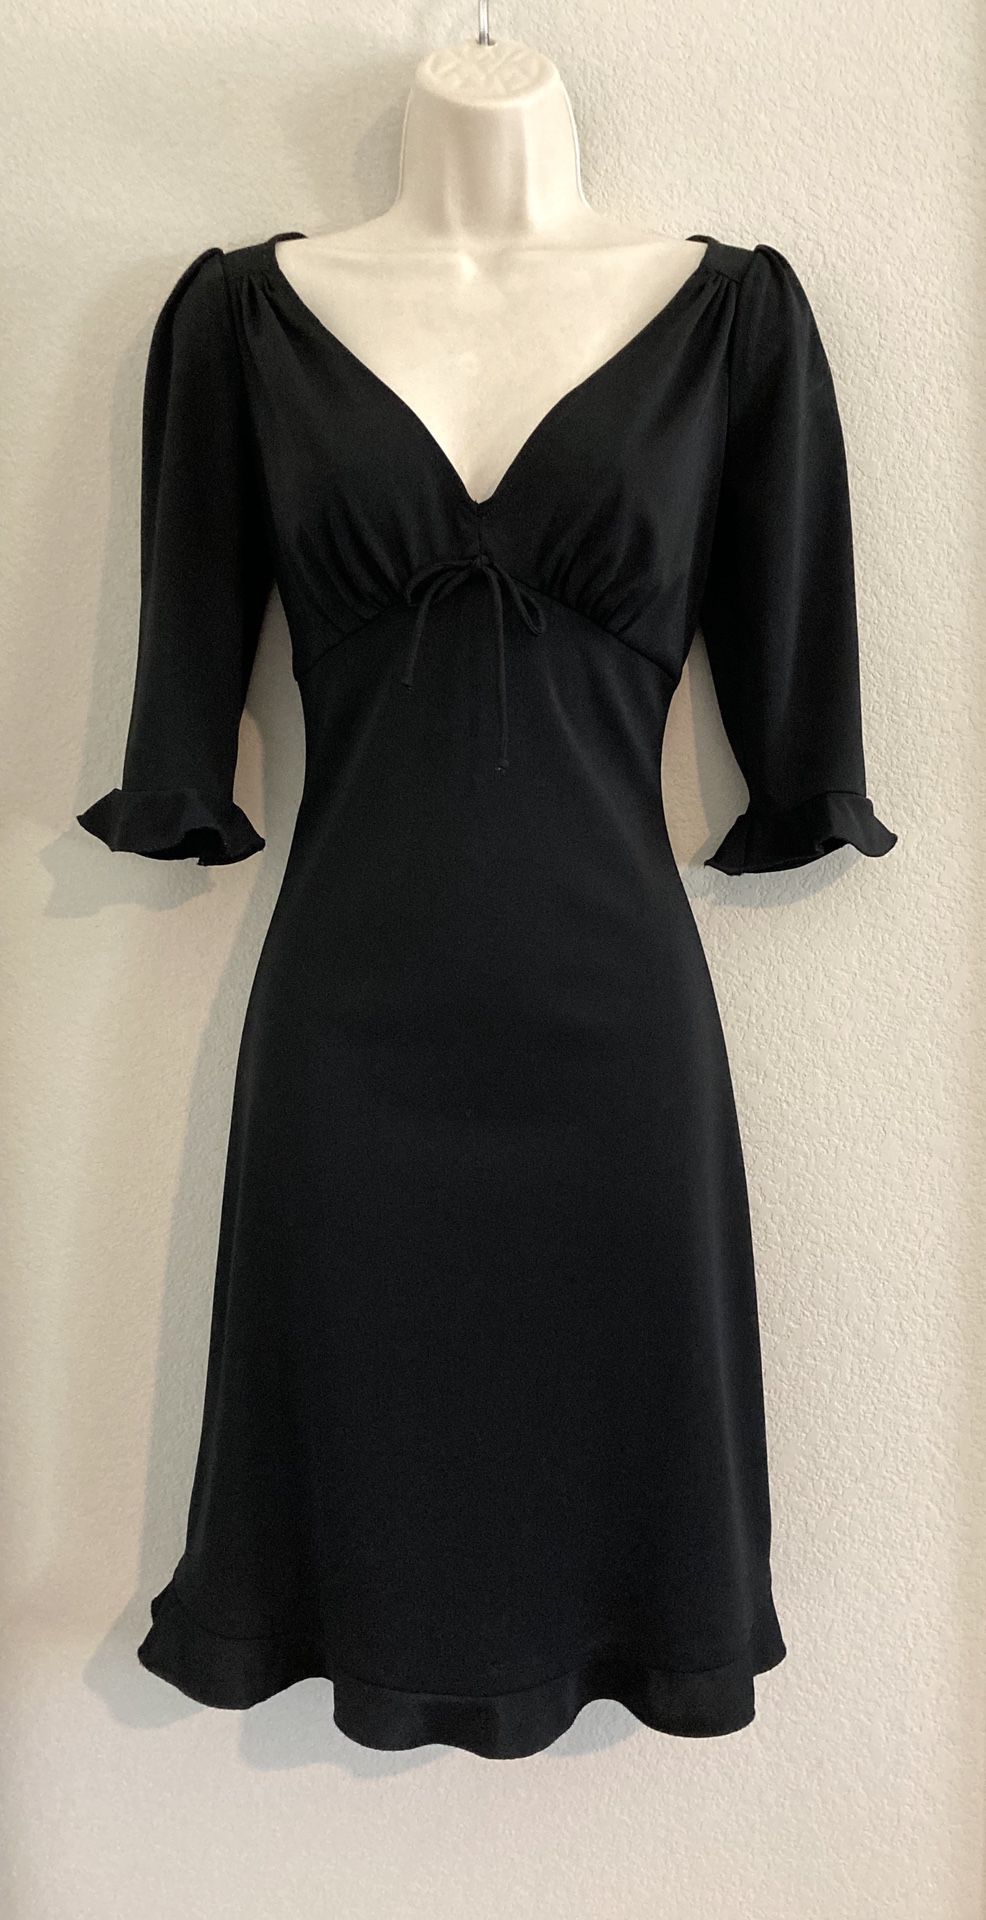 NWOT Betsey Johnson black dress. Sz Small